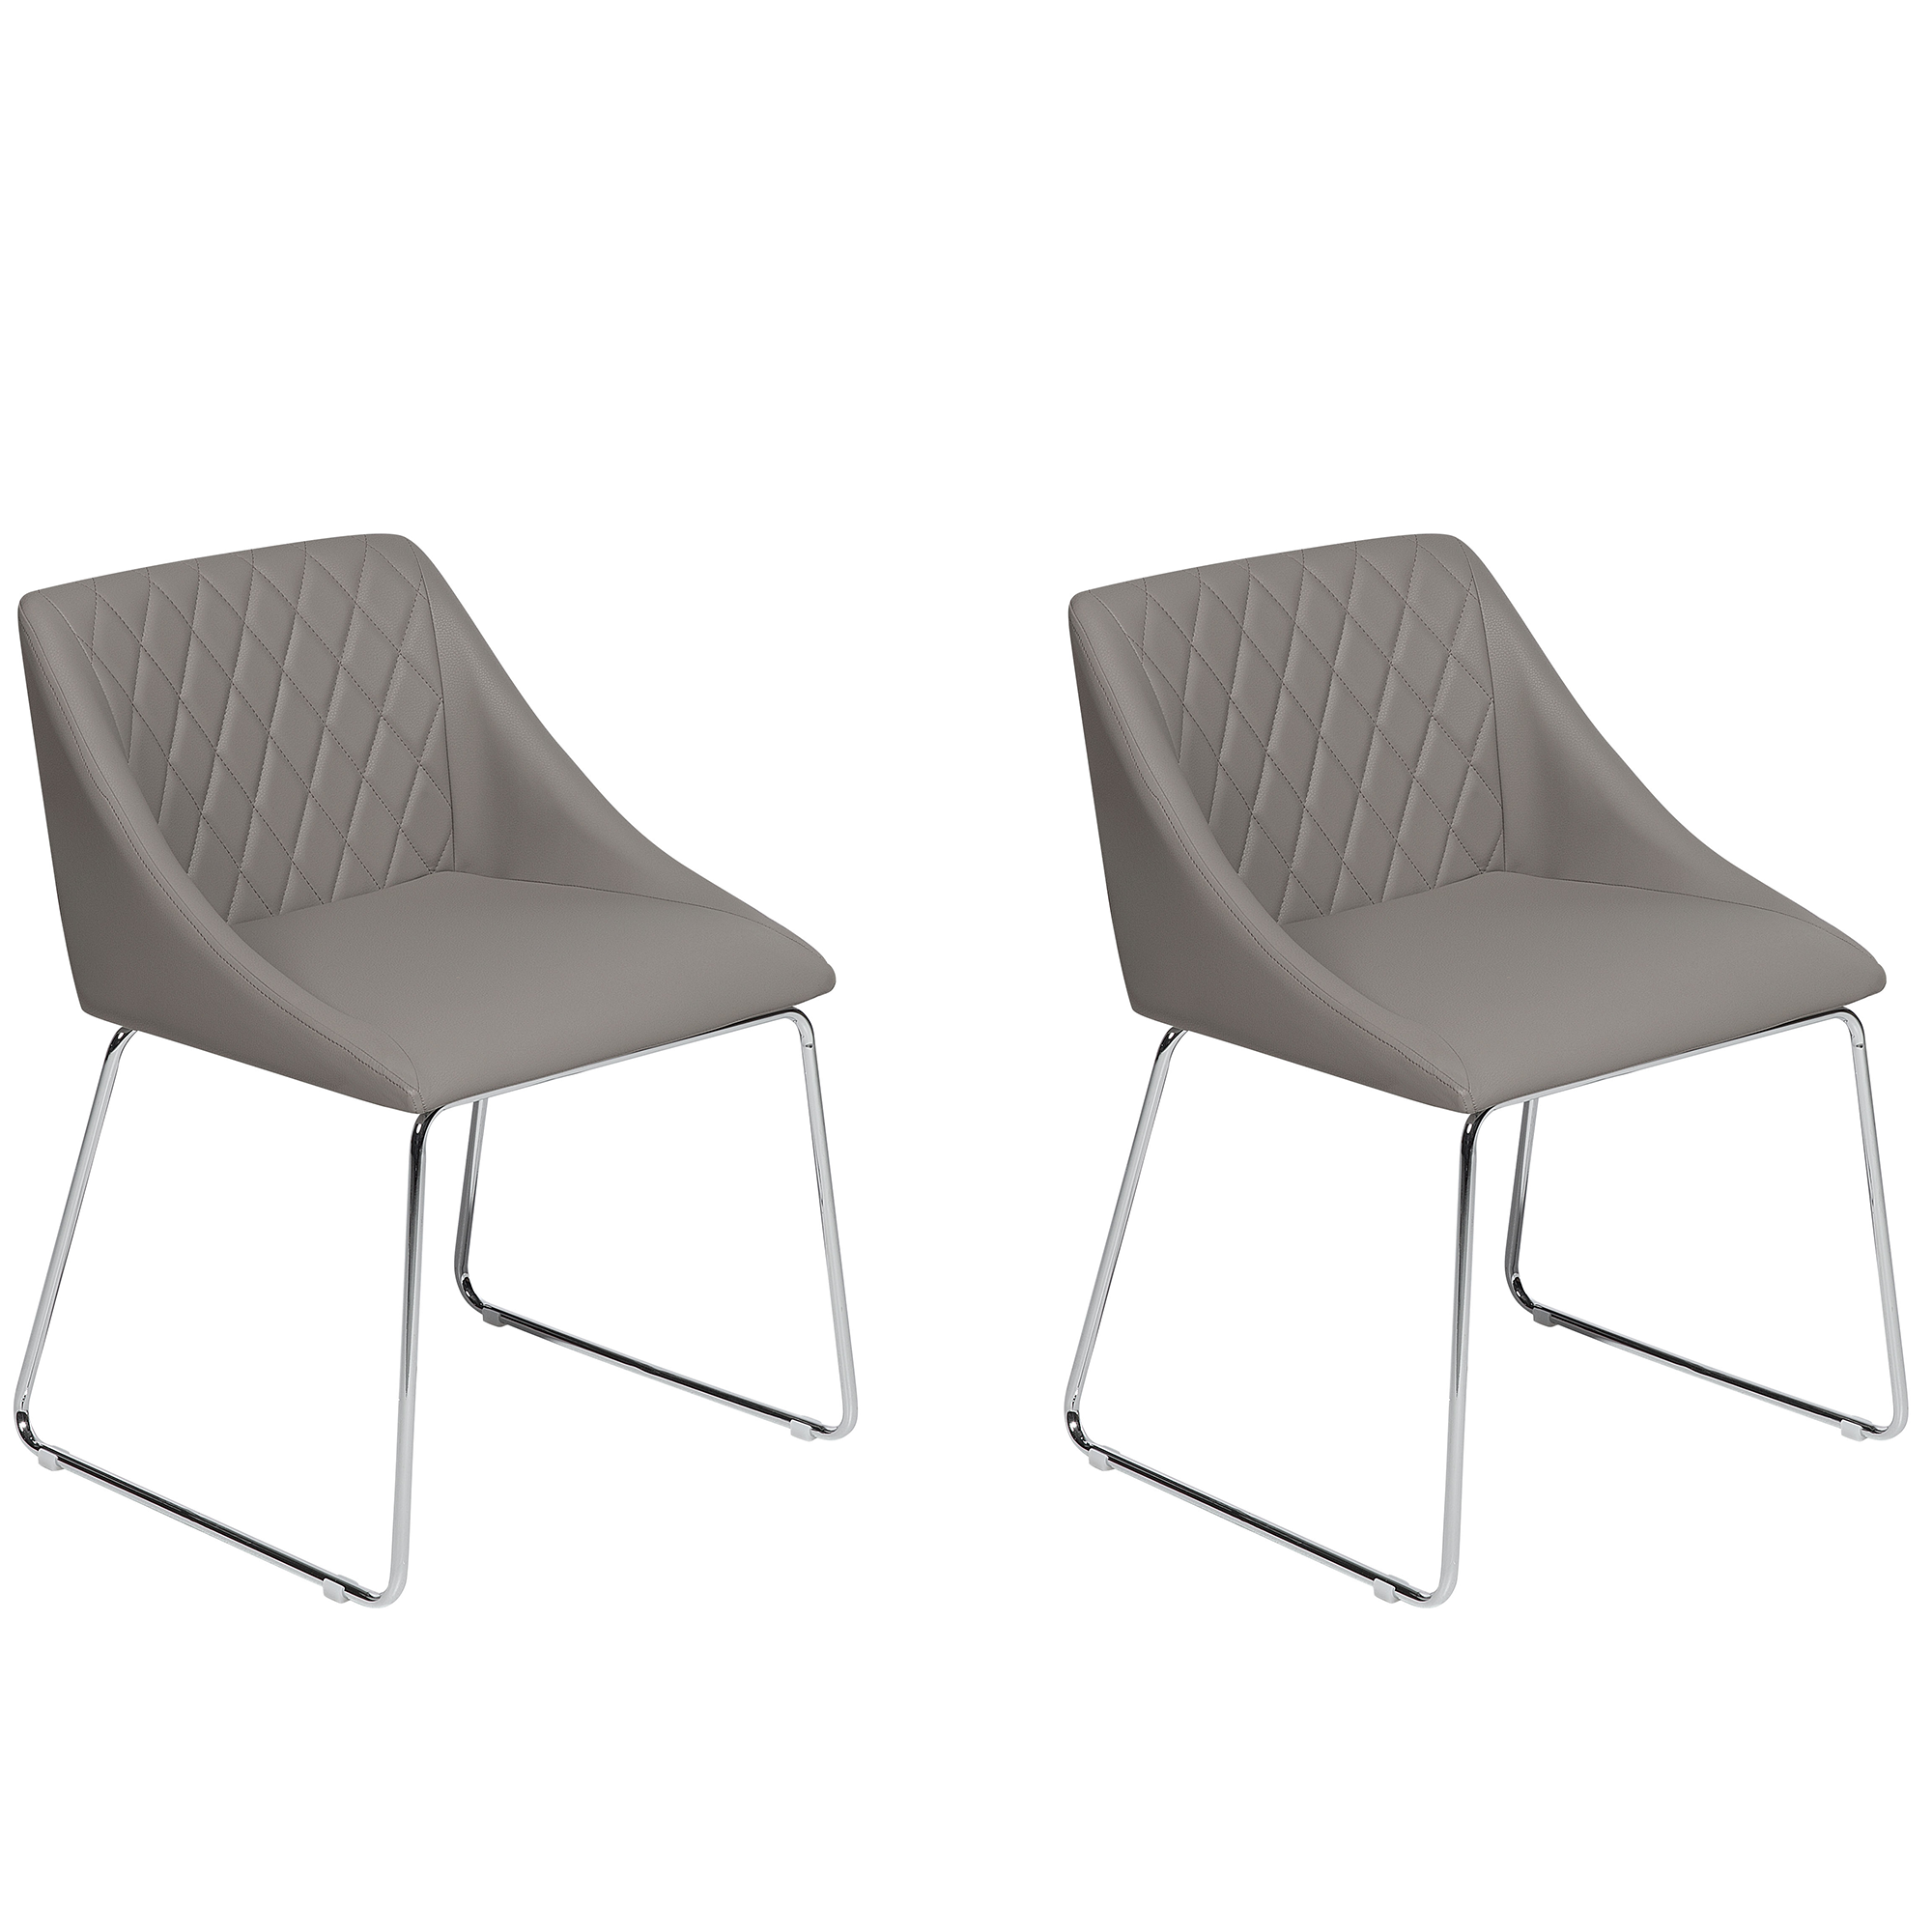 Beliani Set of 2 Dining Chairs Grey Fabric Chromed Metal Legs Modern